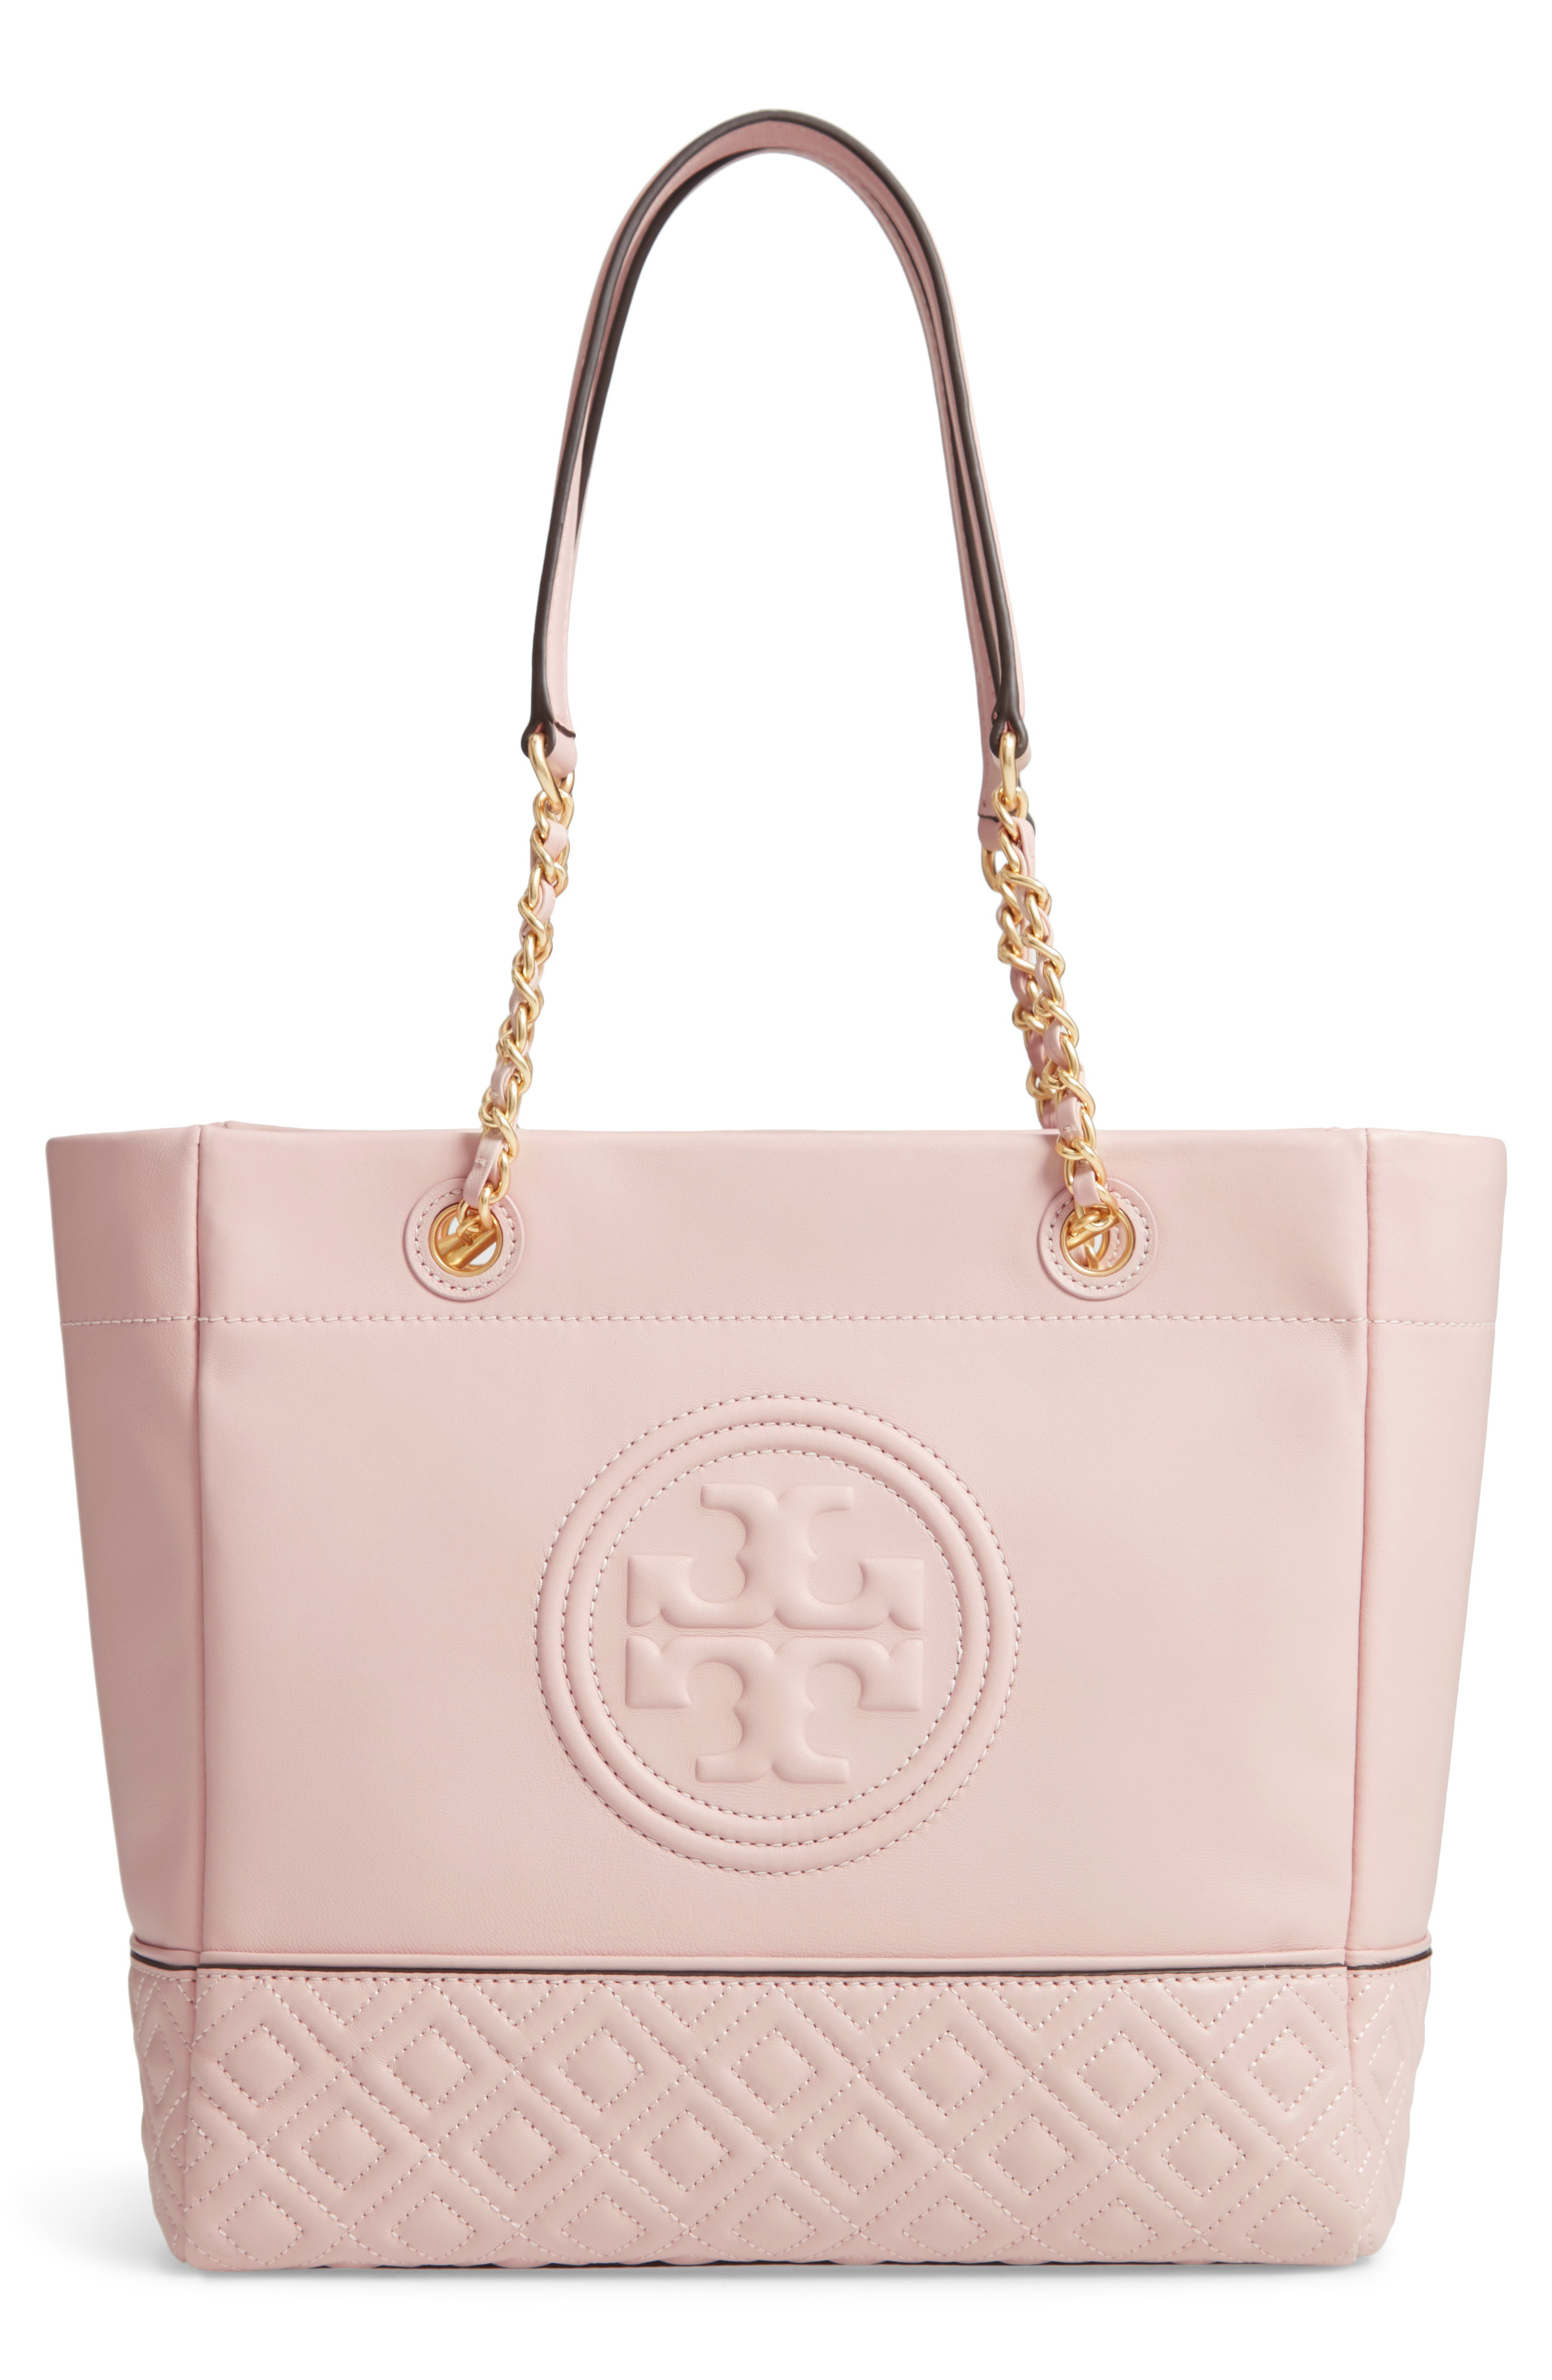 pink tory burch purse